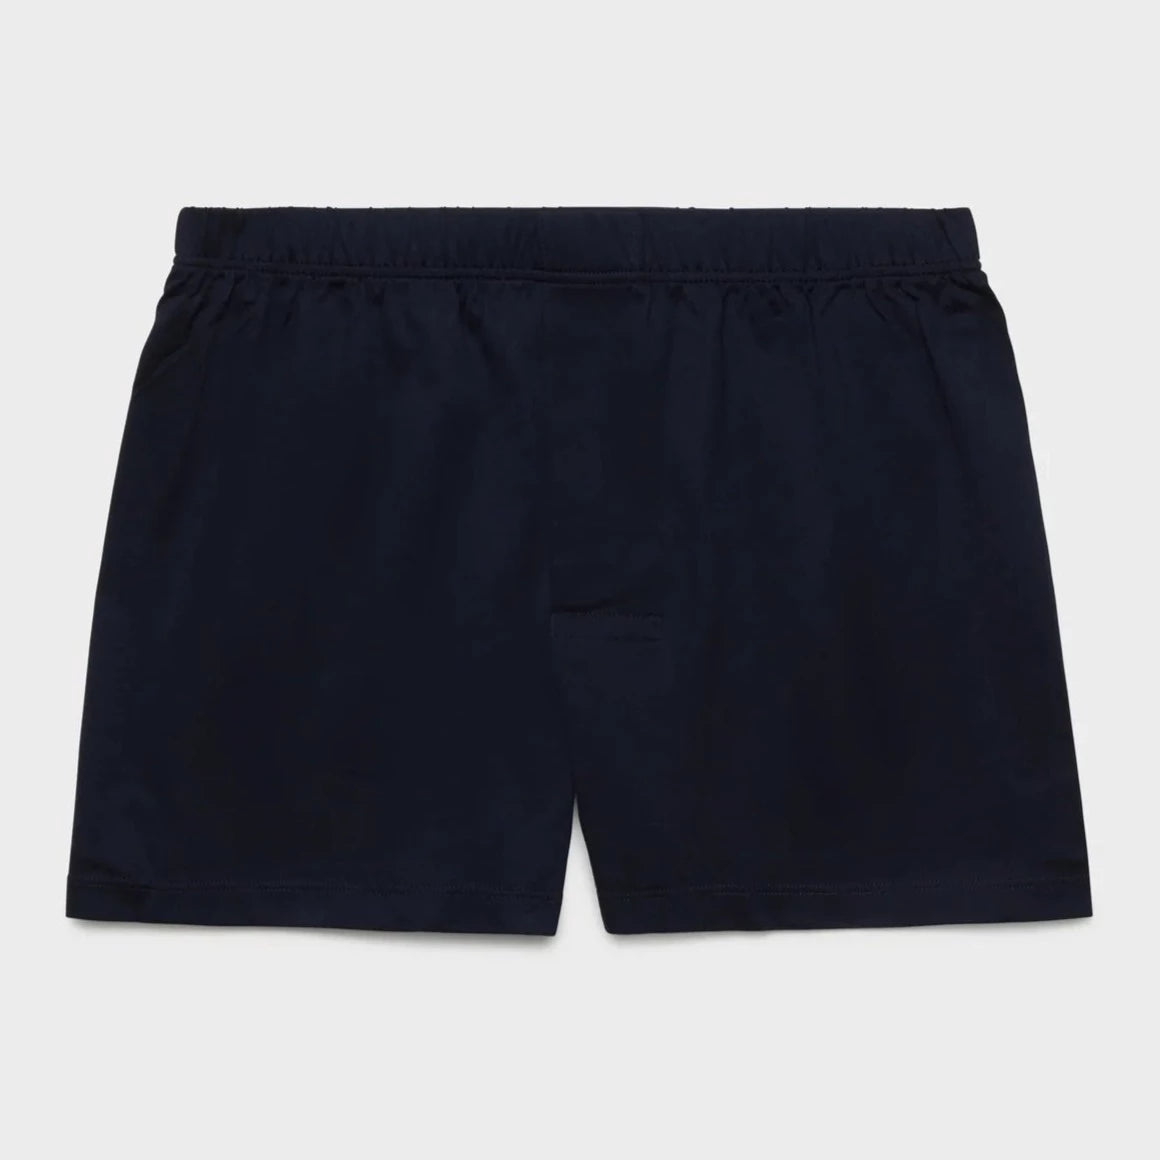 Bresciani 100% Cotton Boxer Shorts Black